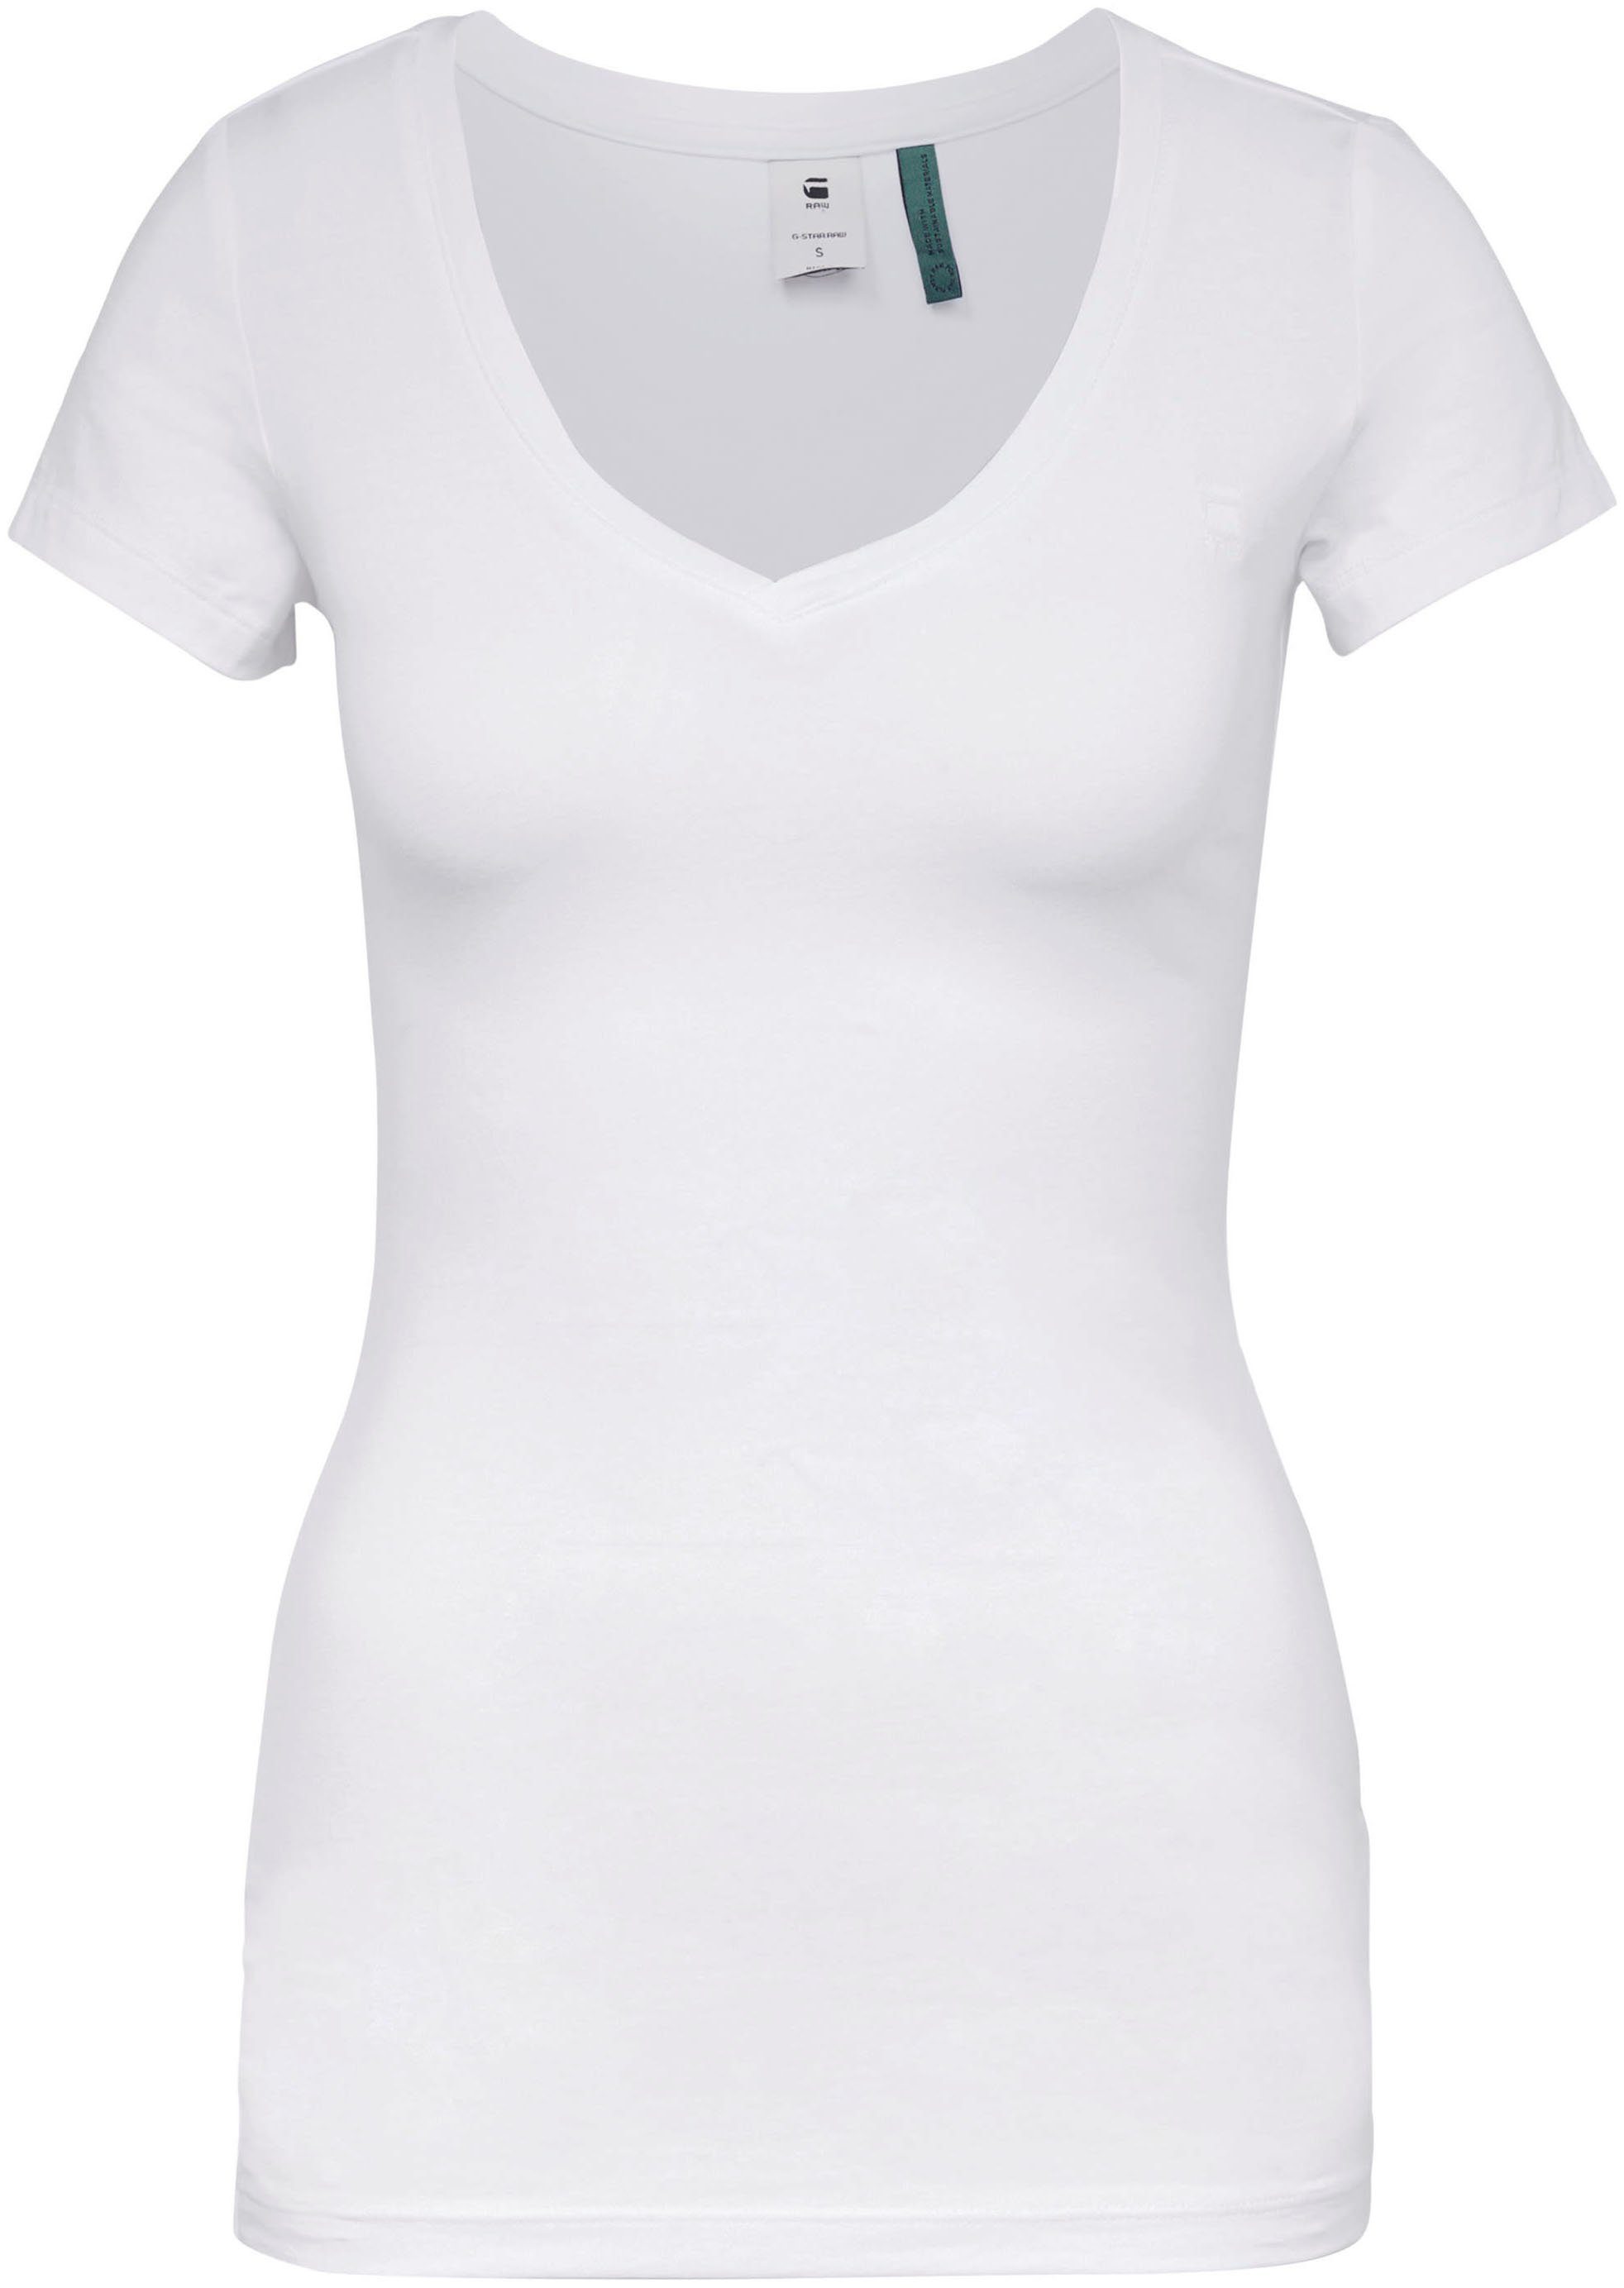 G-Star RAW V-Shirt Base v mit wmn vorne kleinem Logodruck t sl white cap